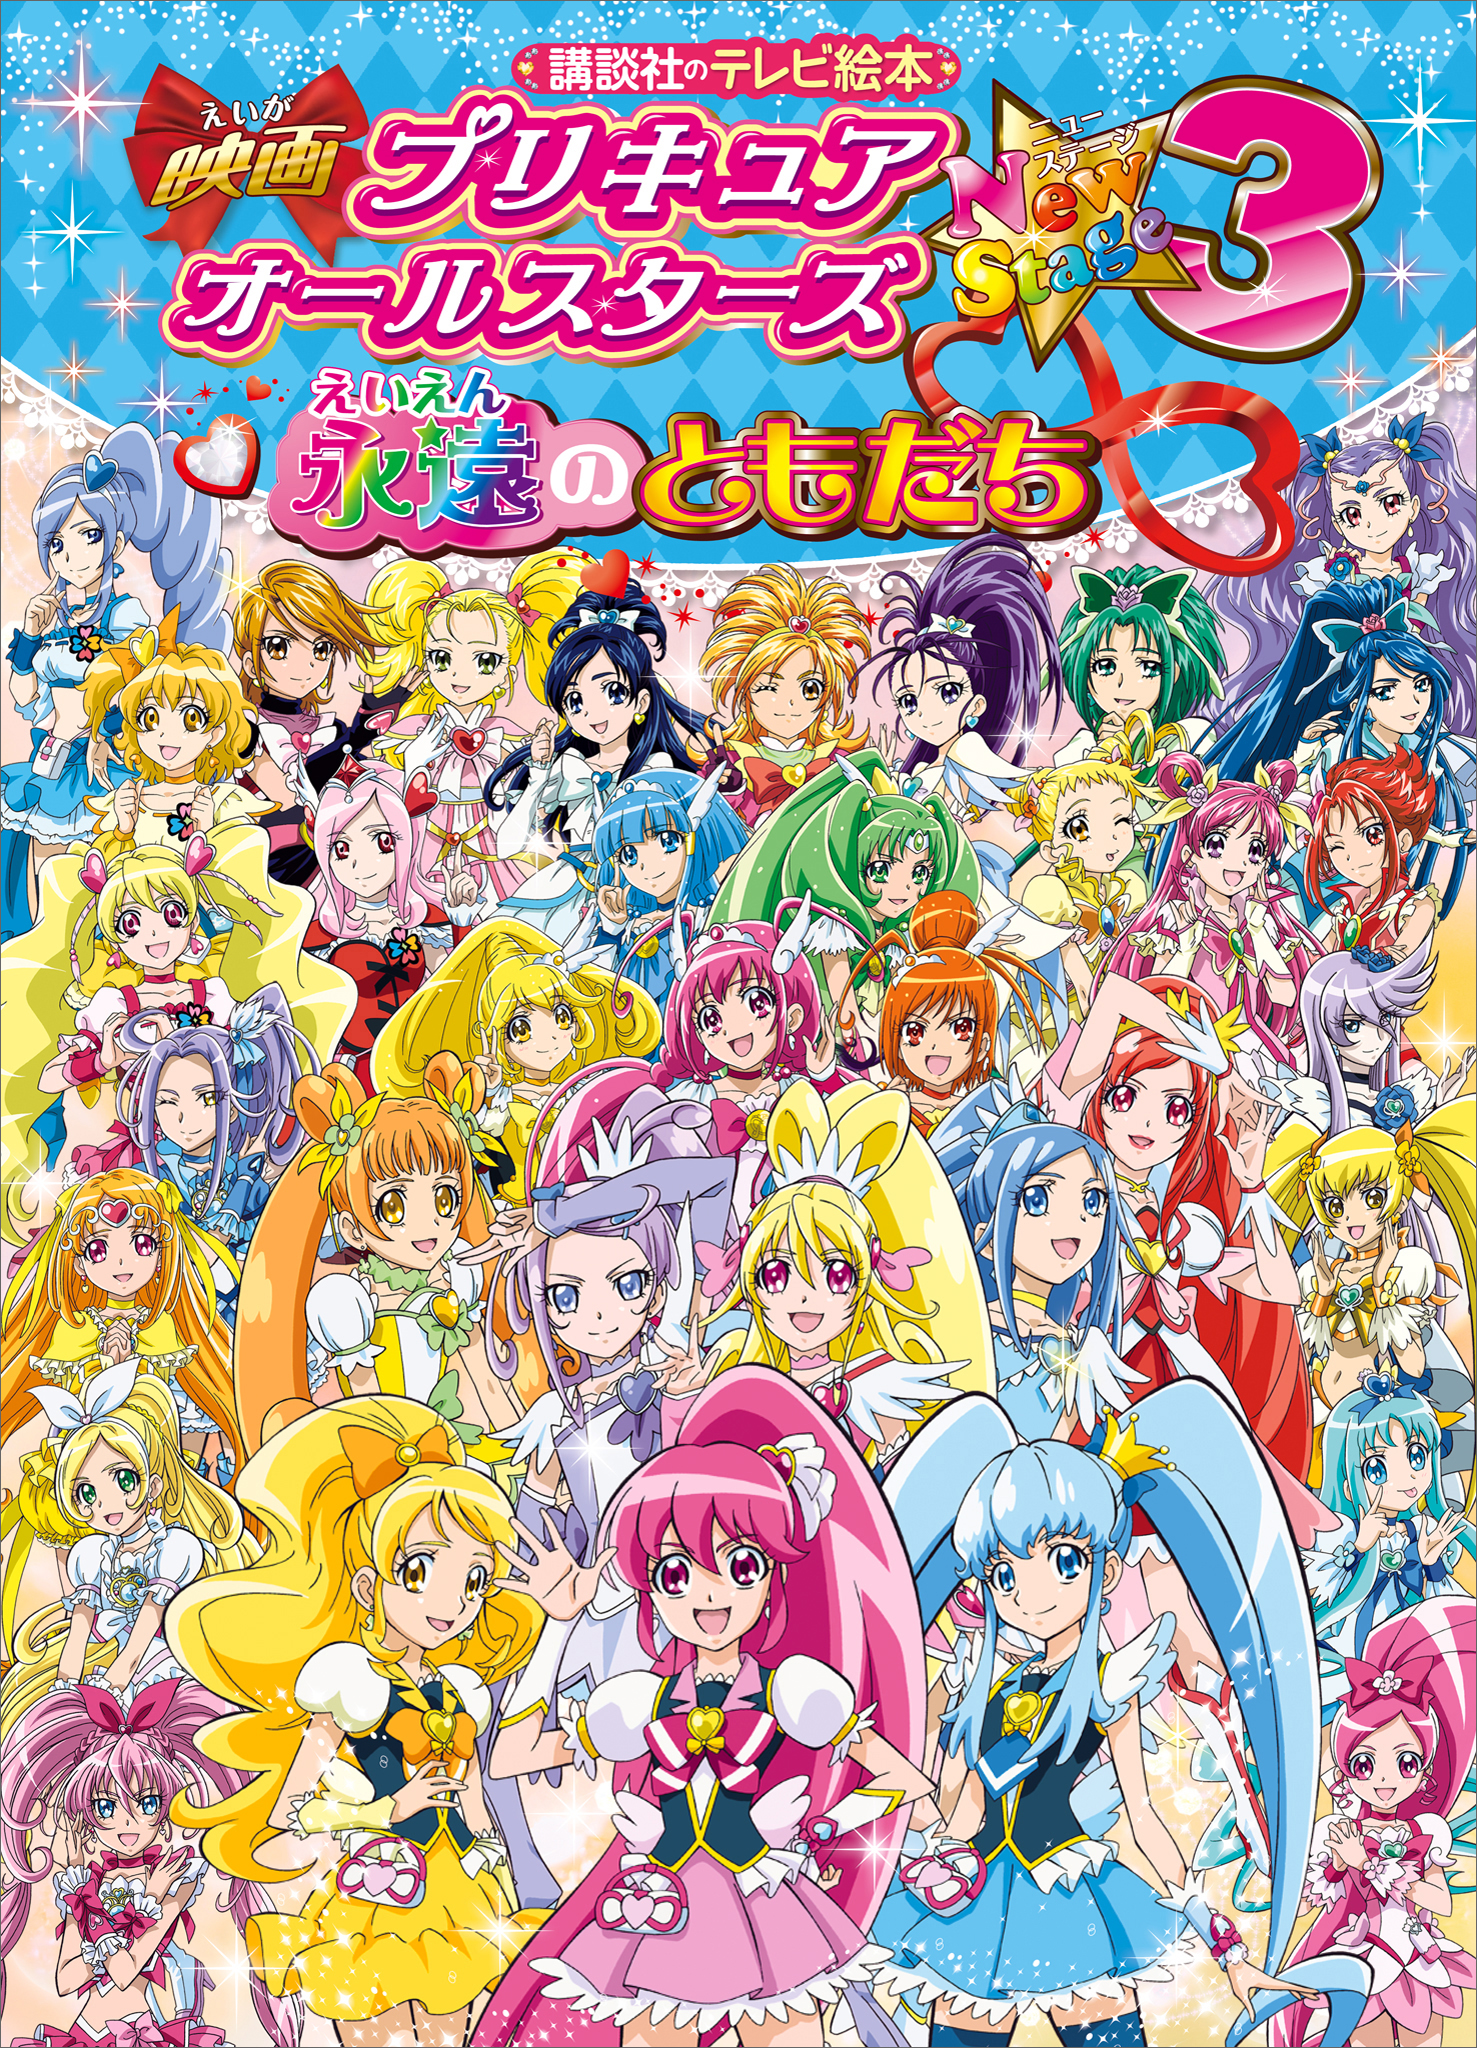 DVD 未来にとどけ!世界をつなぐ☆虹色の花 映画プリキュアオールスターズDX3 - 6